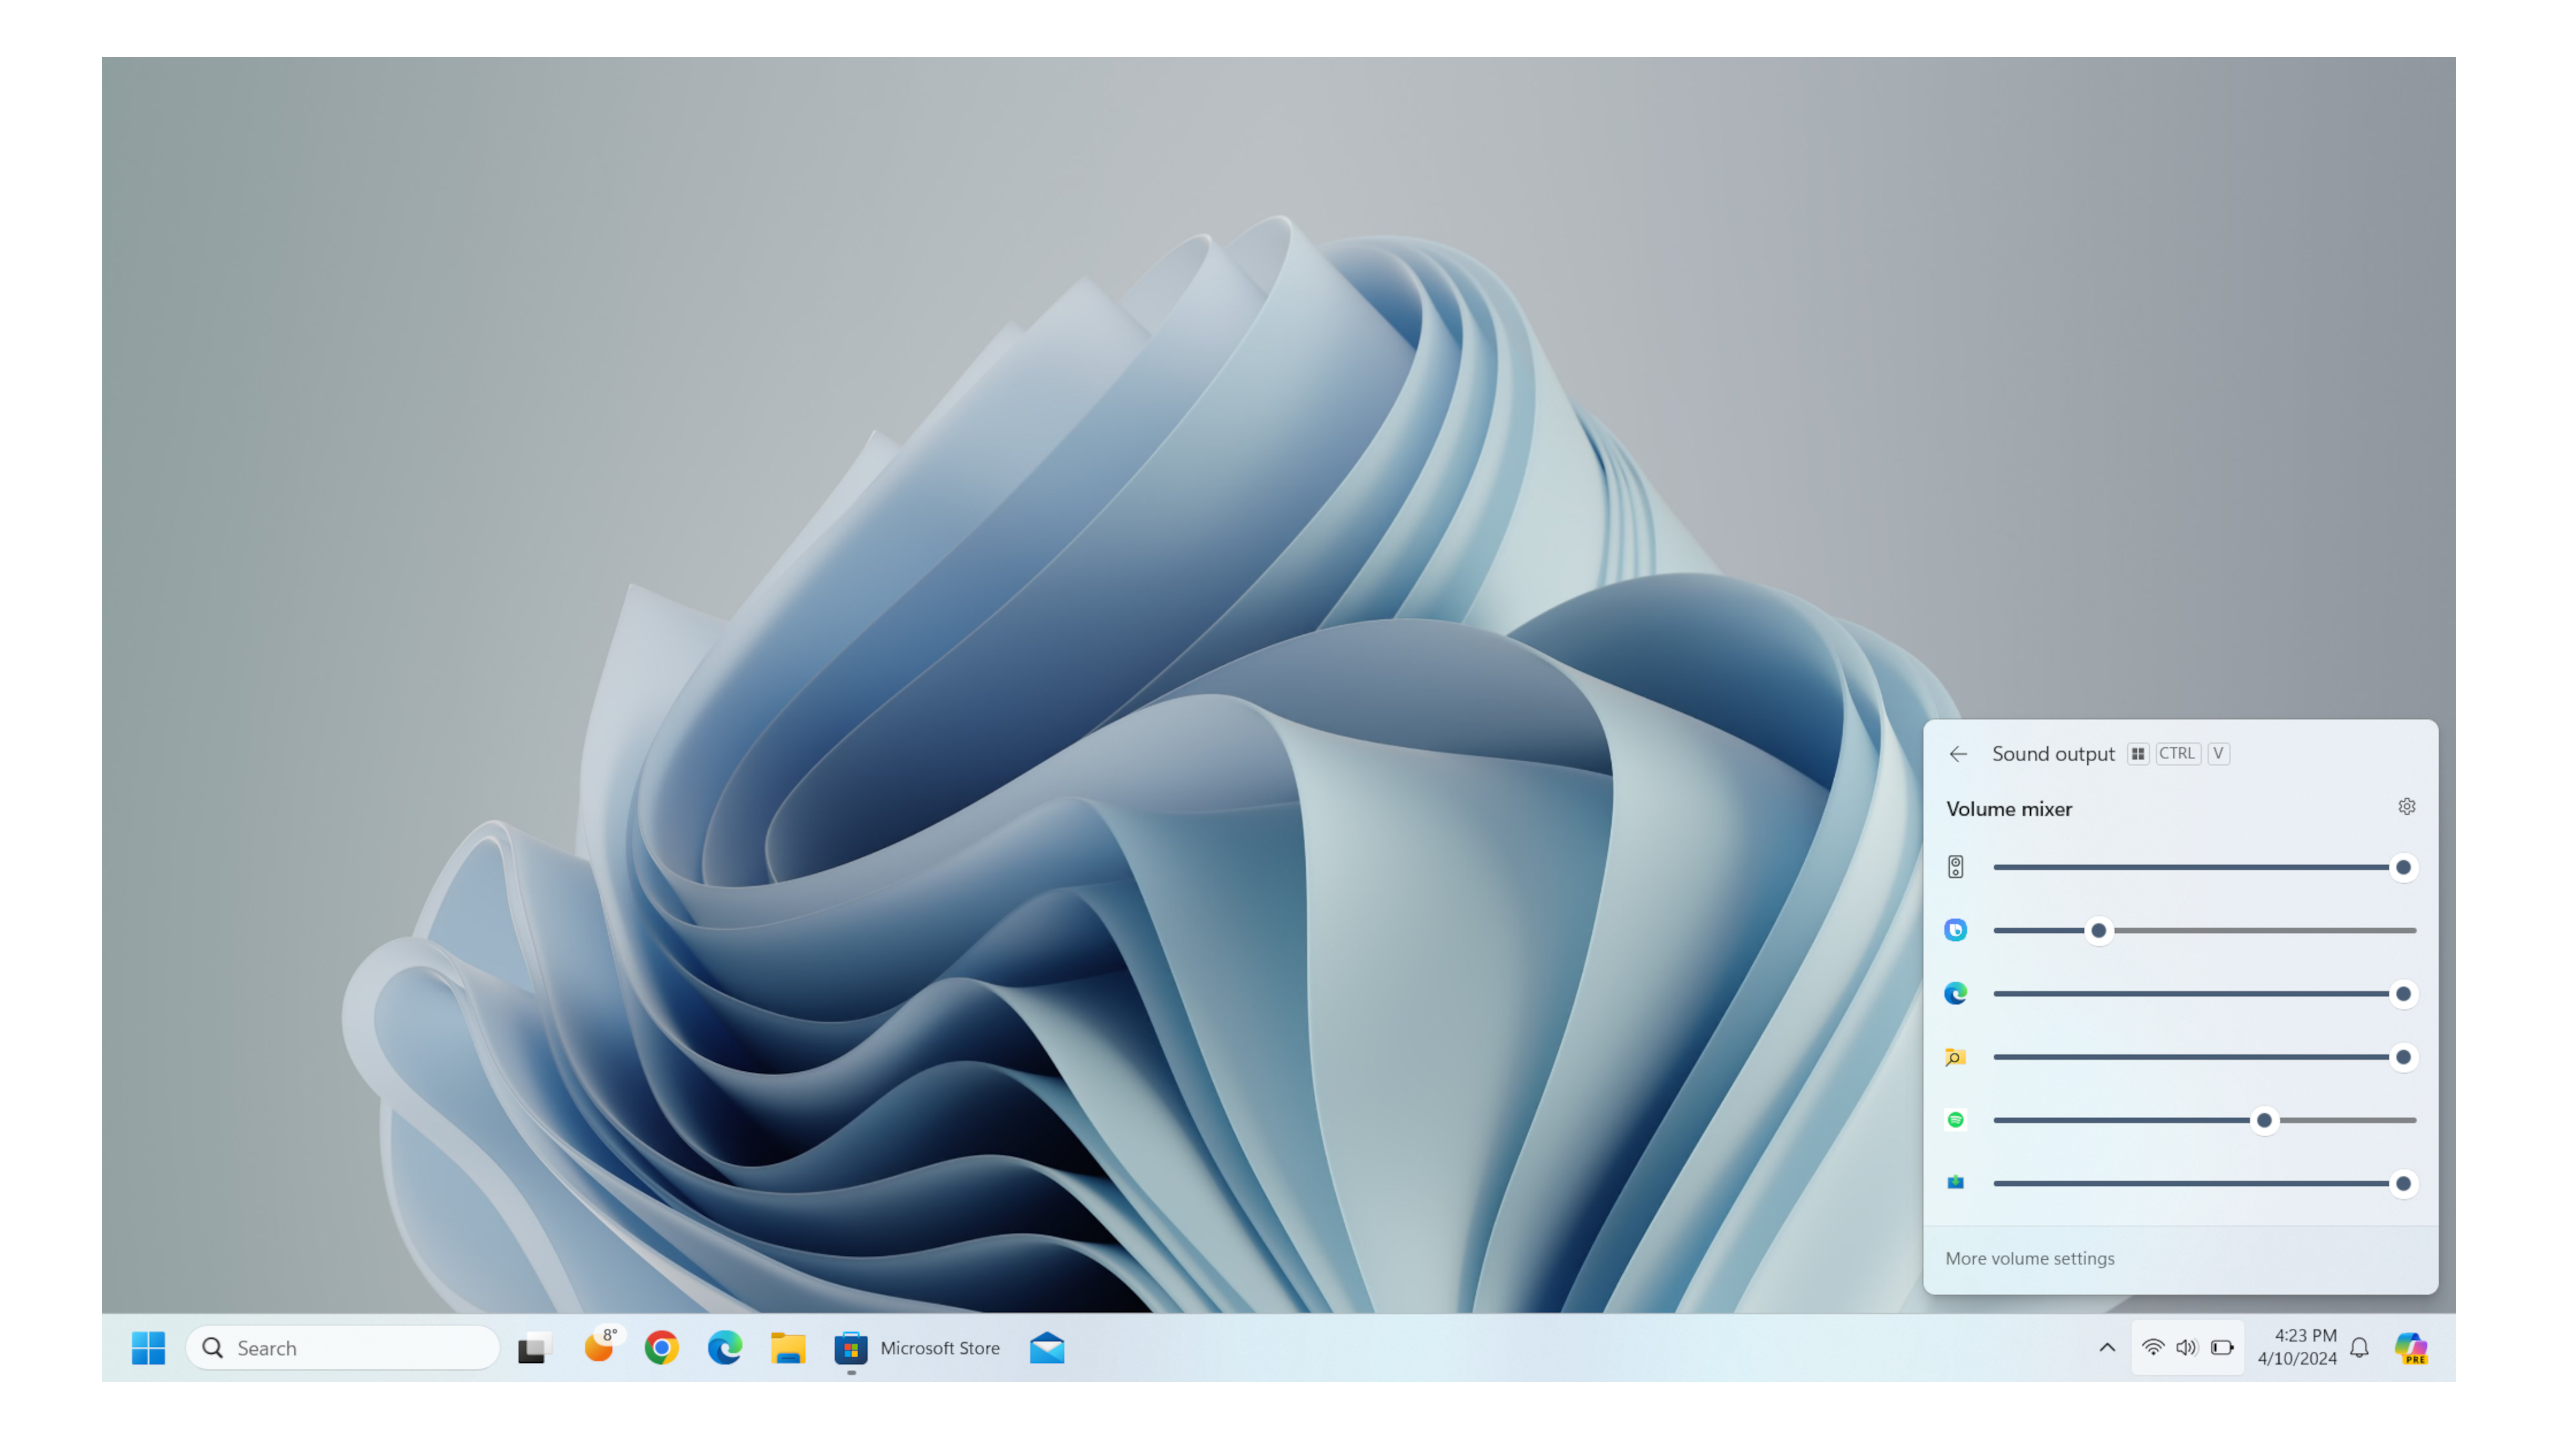 Windows volume mixer displayed on the desktop